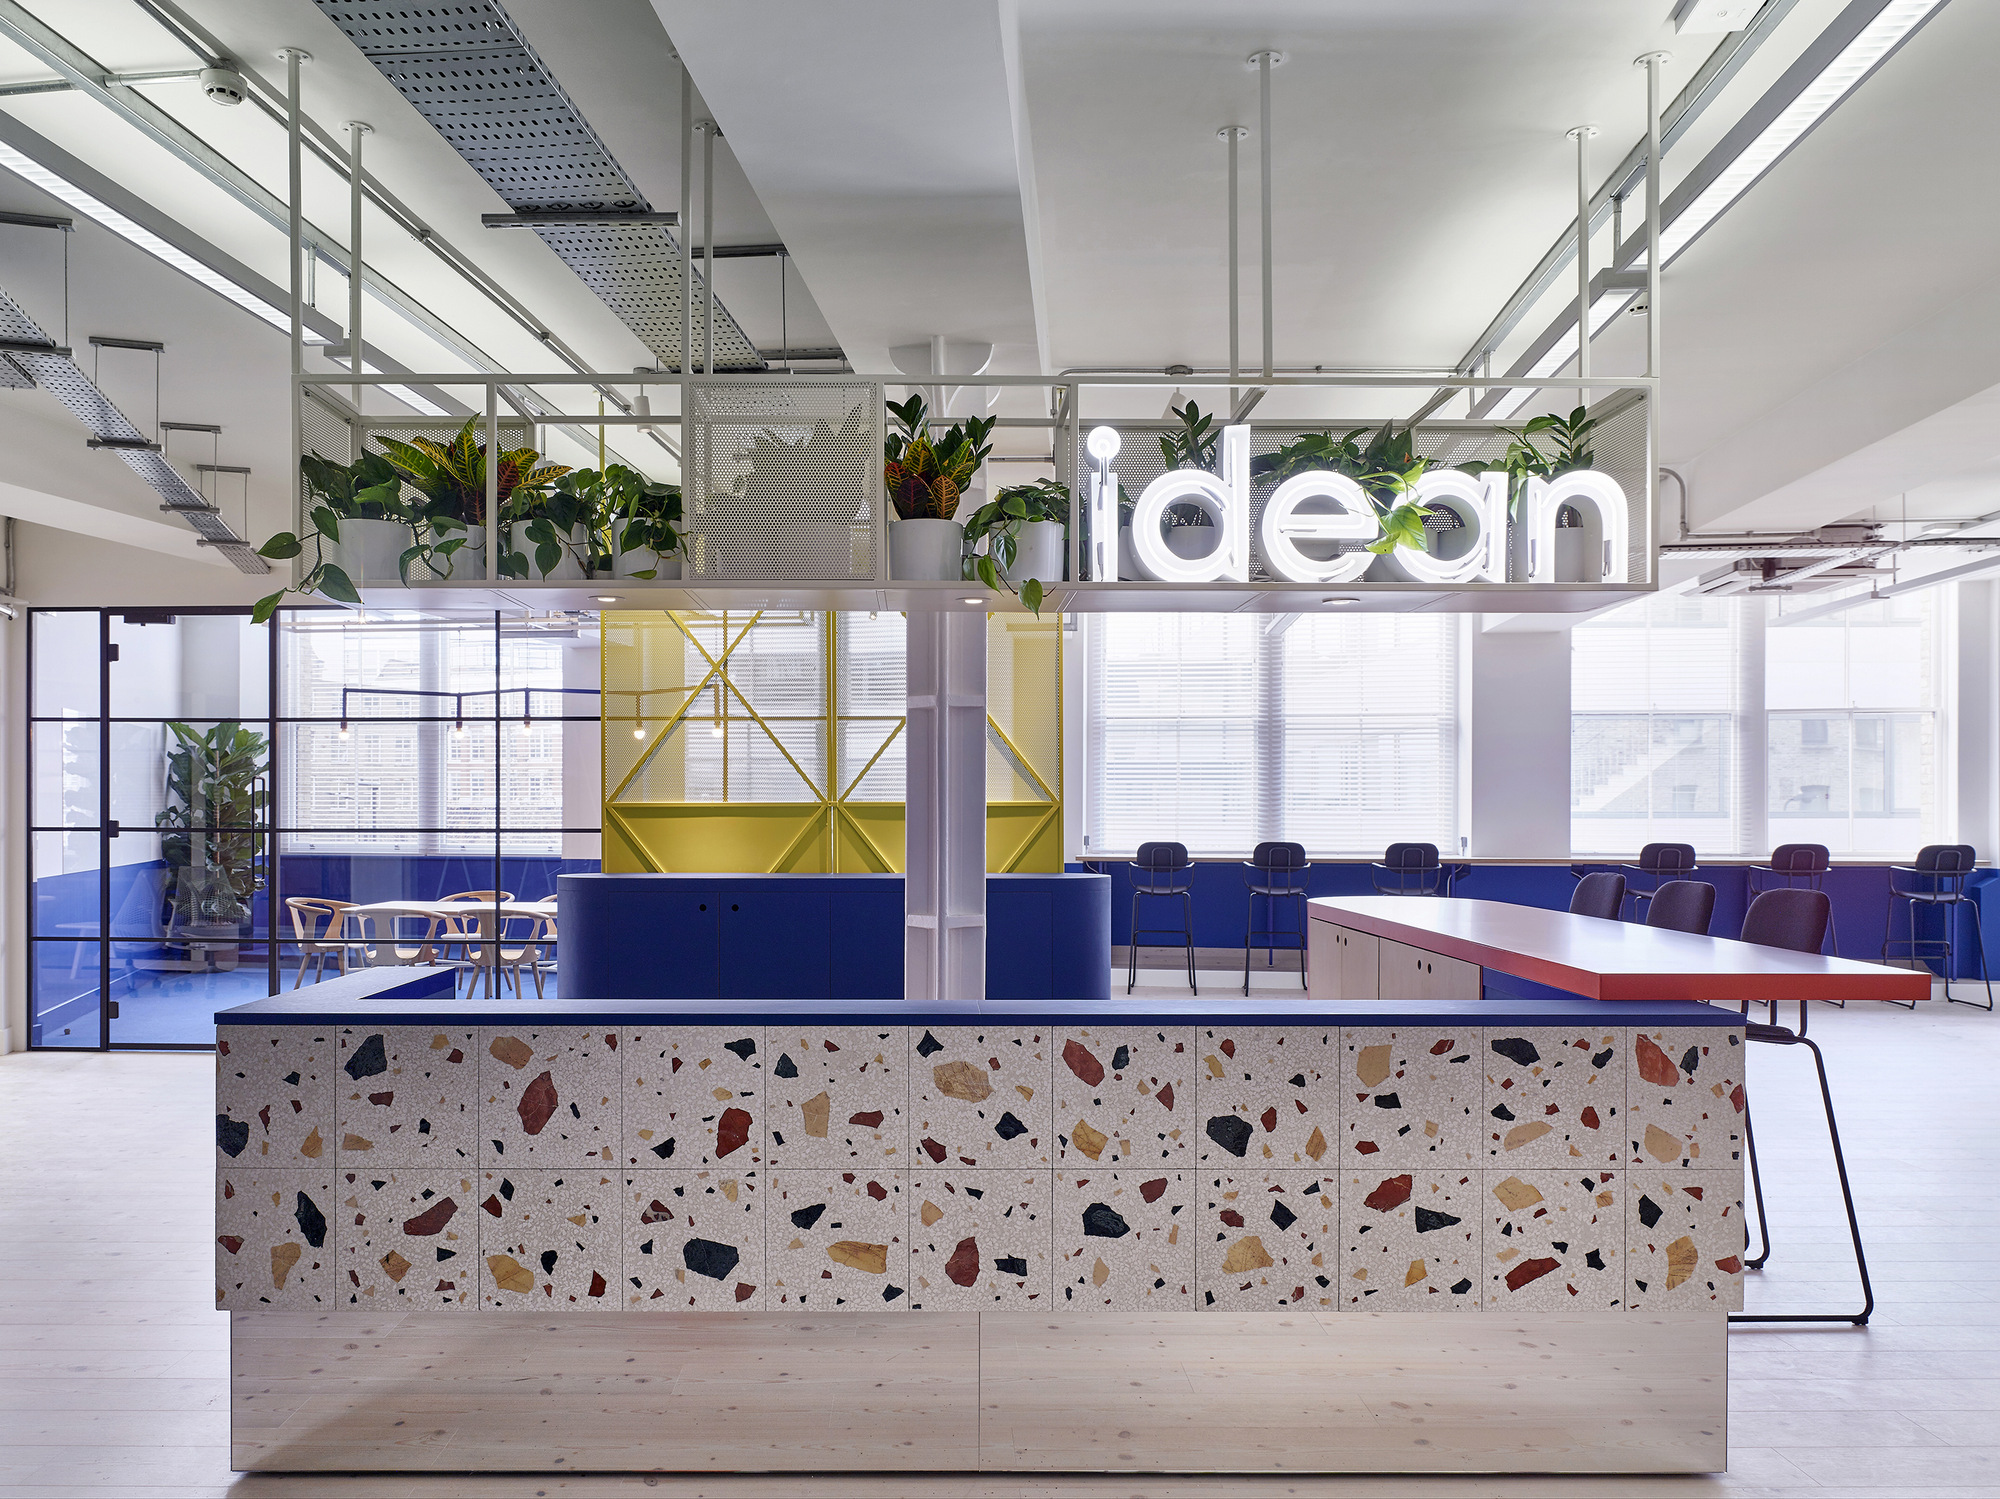 Idean办公室——伦敦|ART-Arrakis | 建筑室内设计的创新与灵感